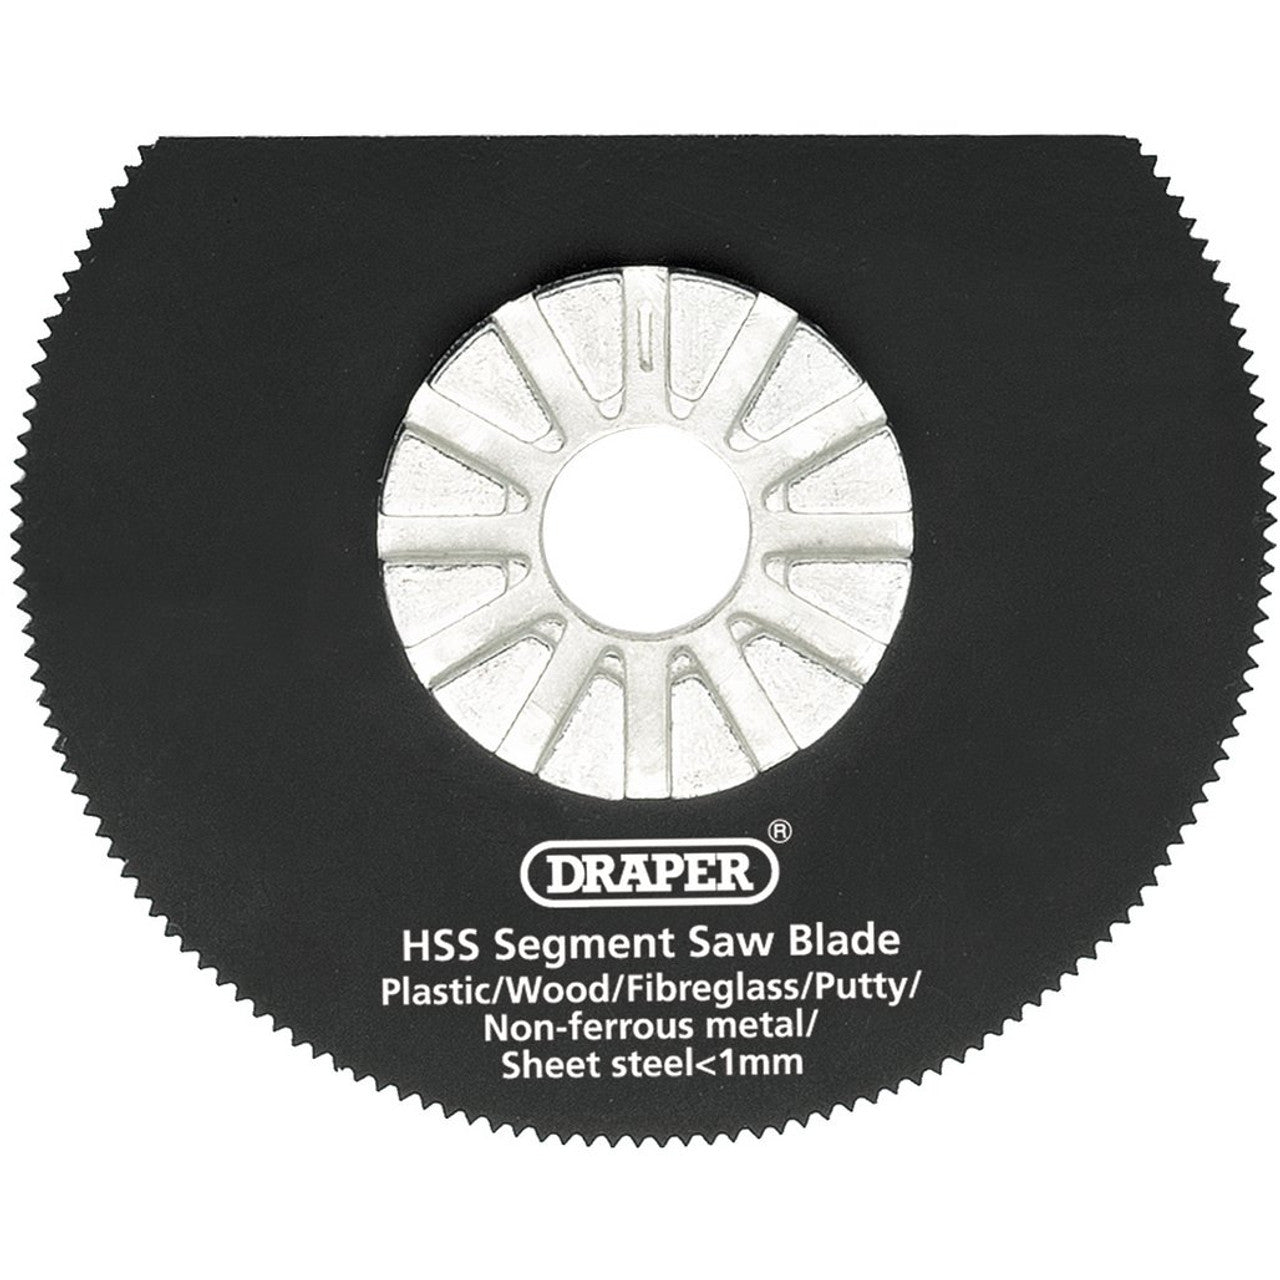 Draper 26057 HSS Segment Saw Blade, 63mm Diameter, 18tpi